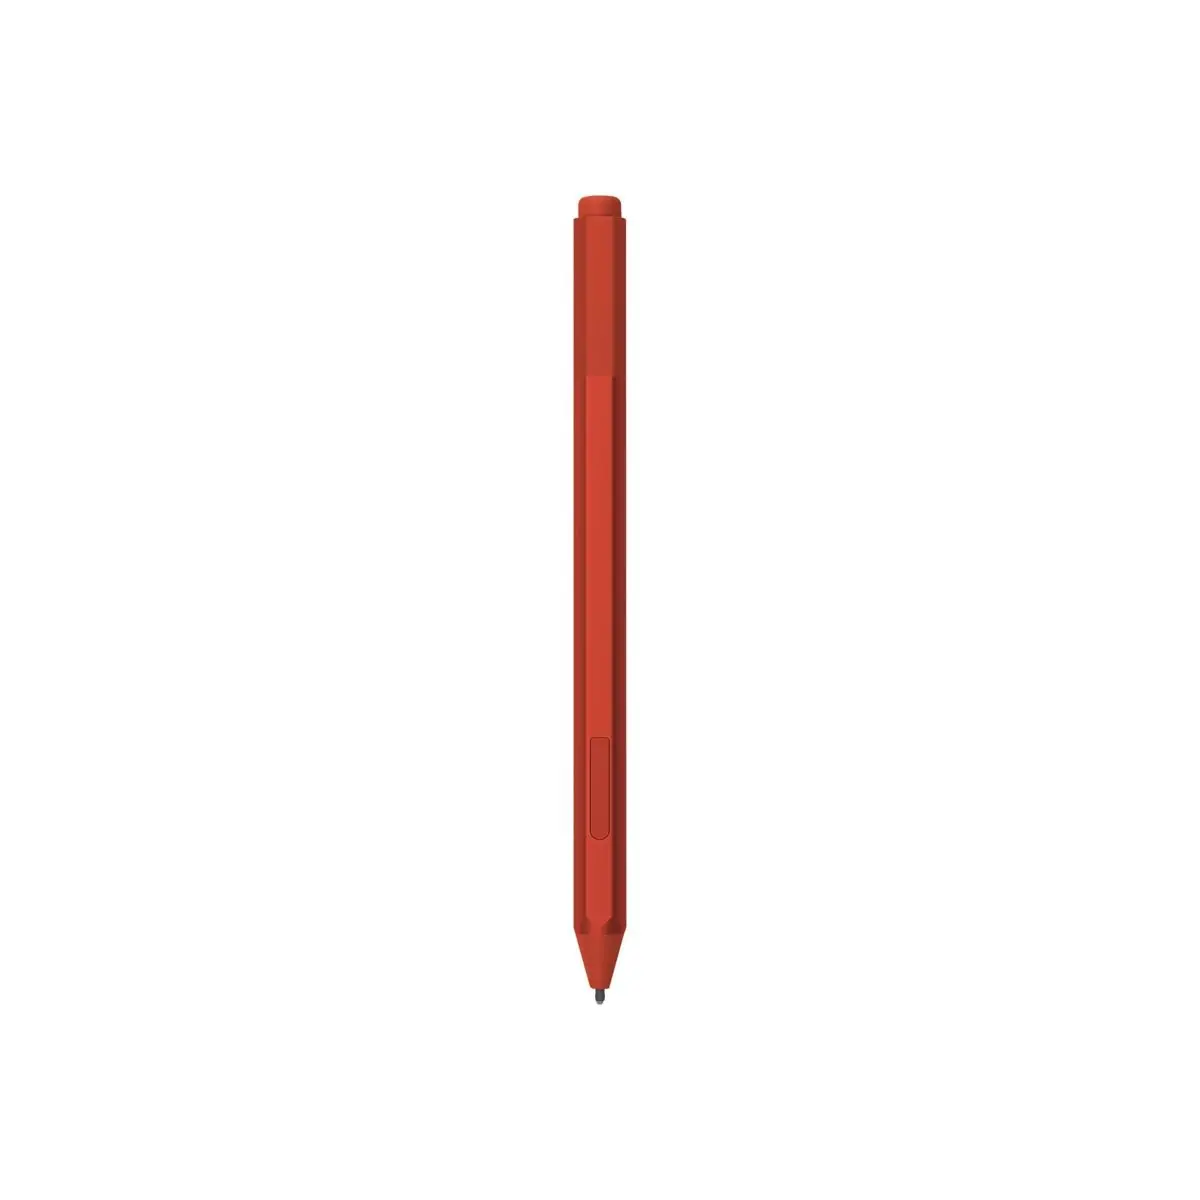 MS Srfc Pro Pen Poppy Red photo du produit